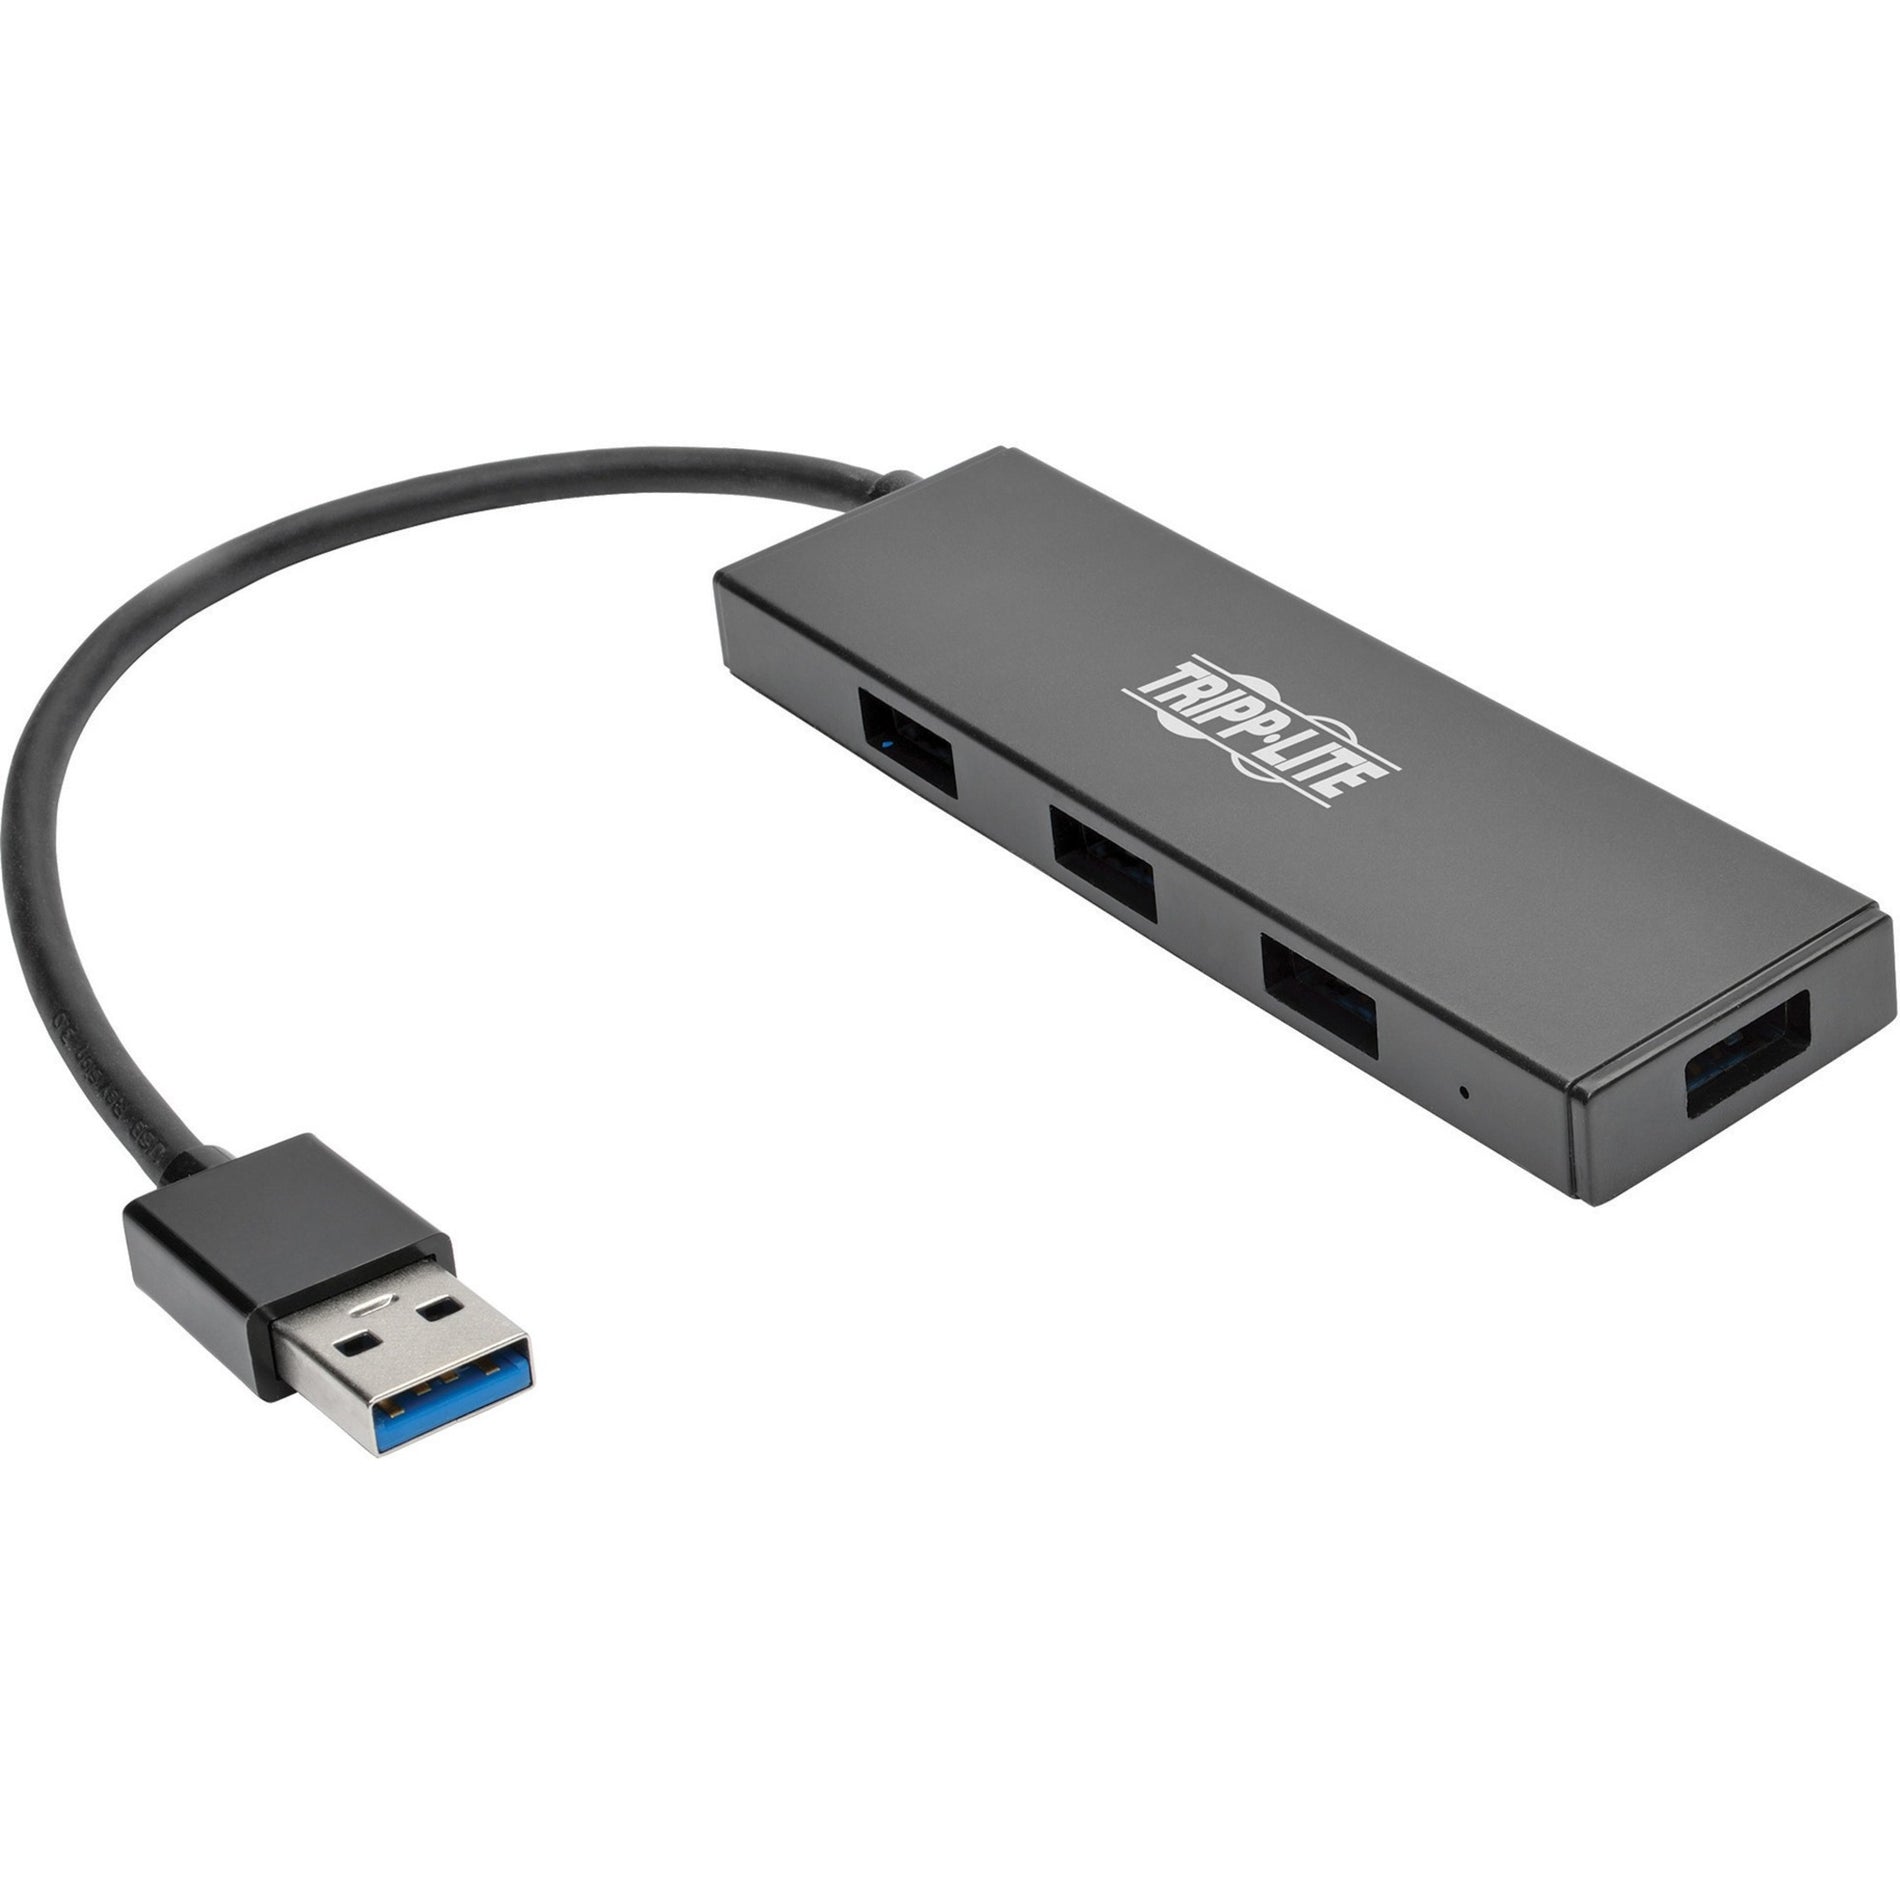 Tripp Lite U360-004-SLIM 4-Port Ultra-Slim Portable USB 3.0 SuperSpeed Hub, Compact and Convenient USB Hub for Mac and PC